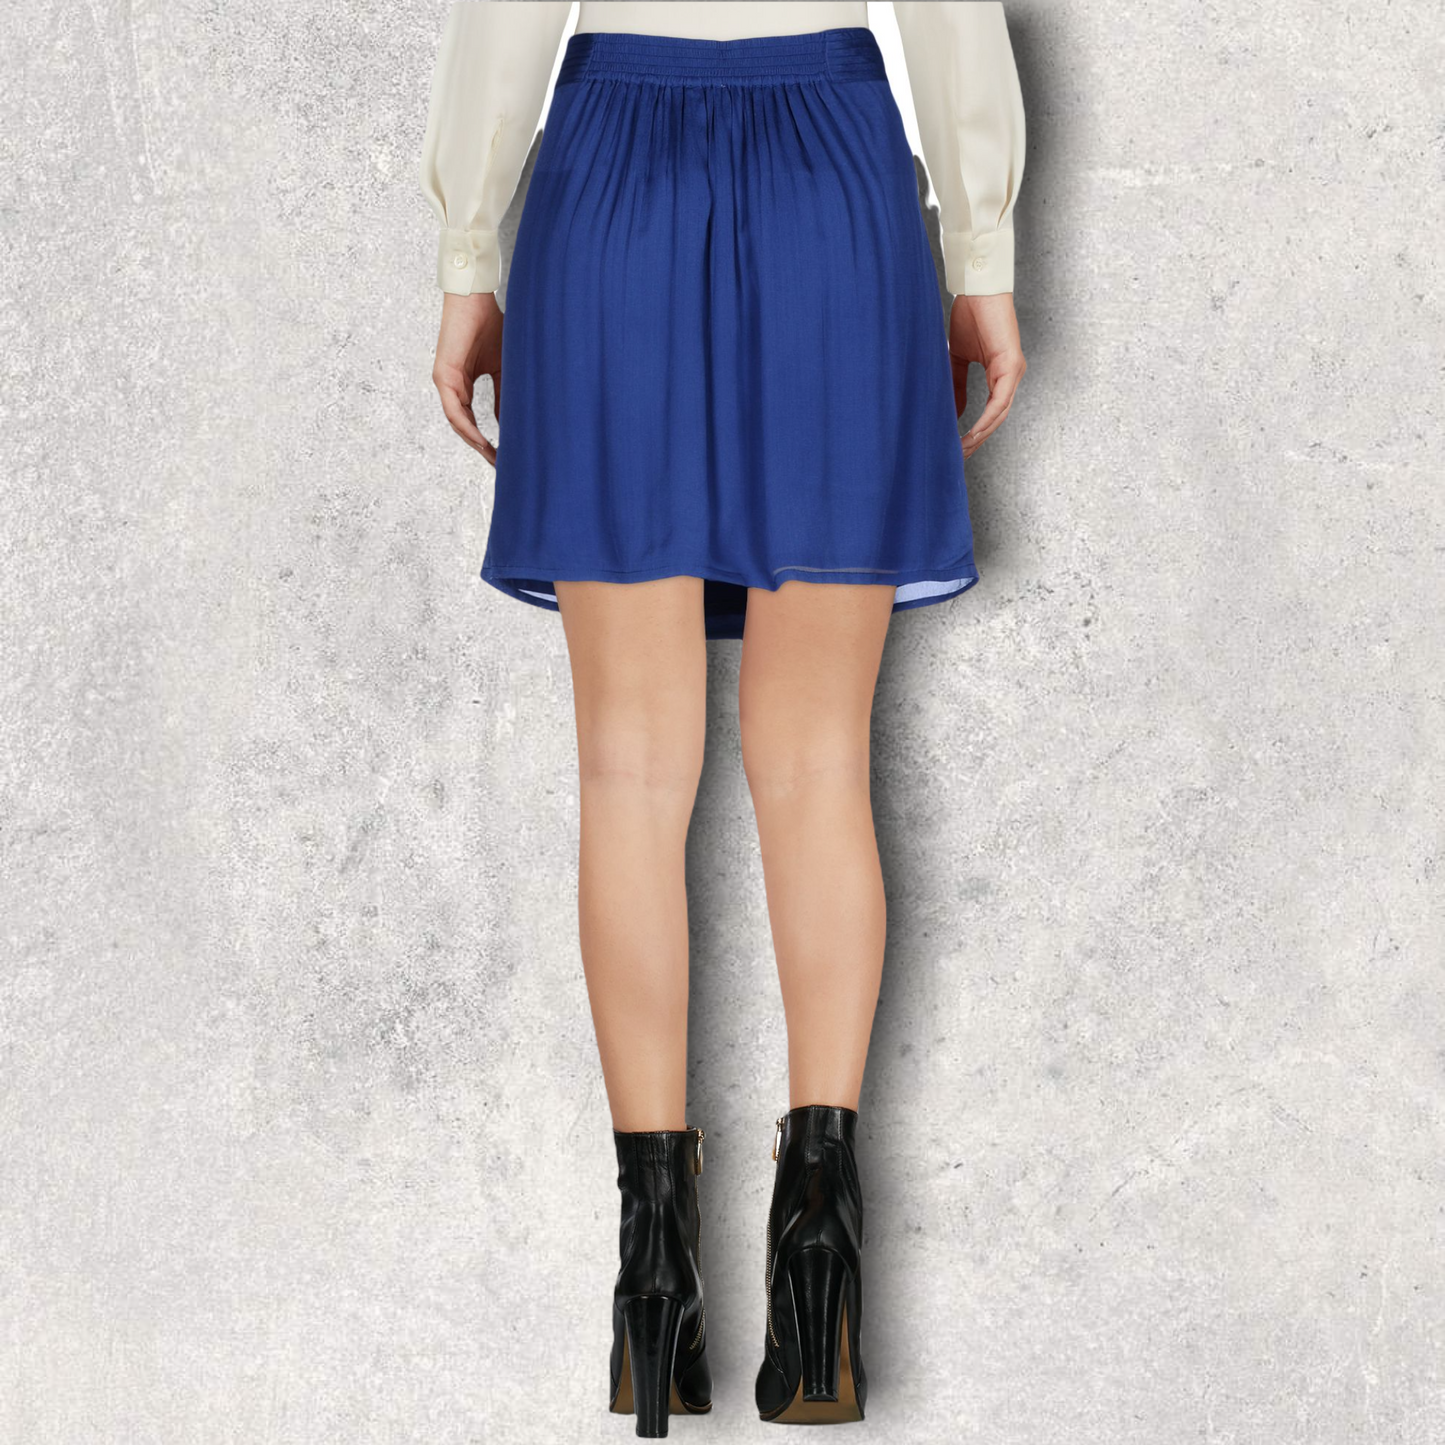 Hoss Intropia Blue Pleated Crepe Mini Skirt UK 10 US 6 EU 38 BNWT RRP £151 Timeless Fashions